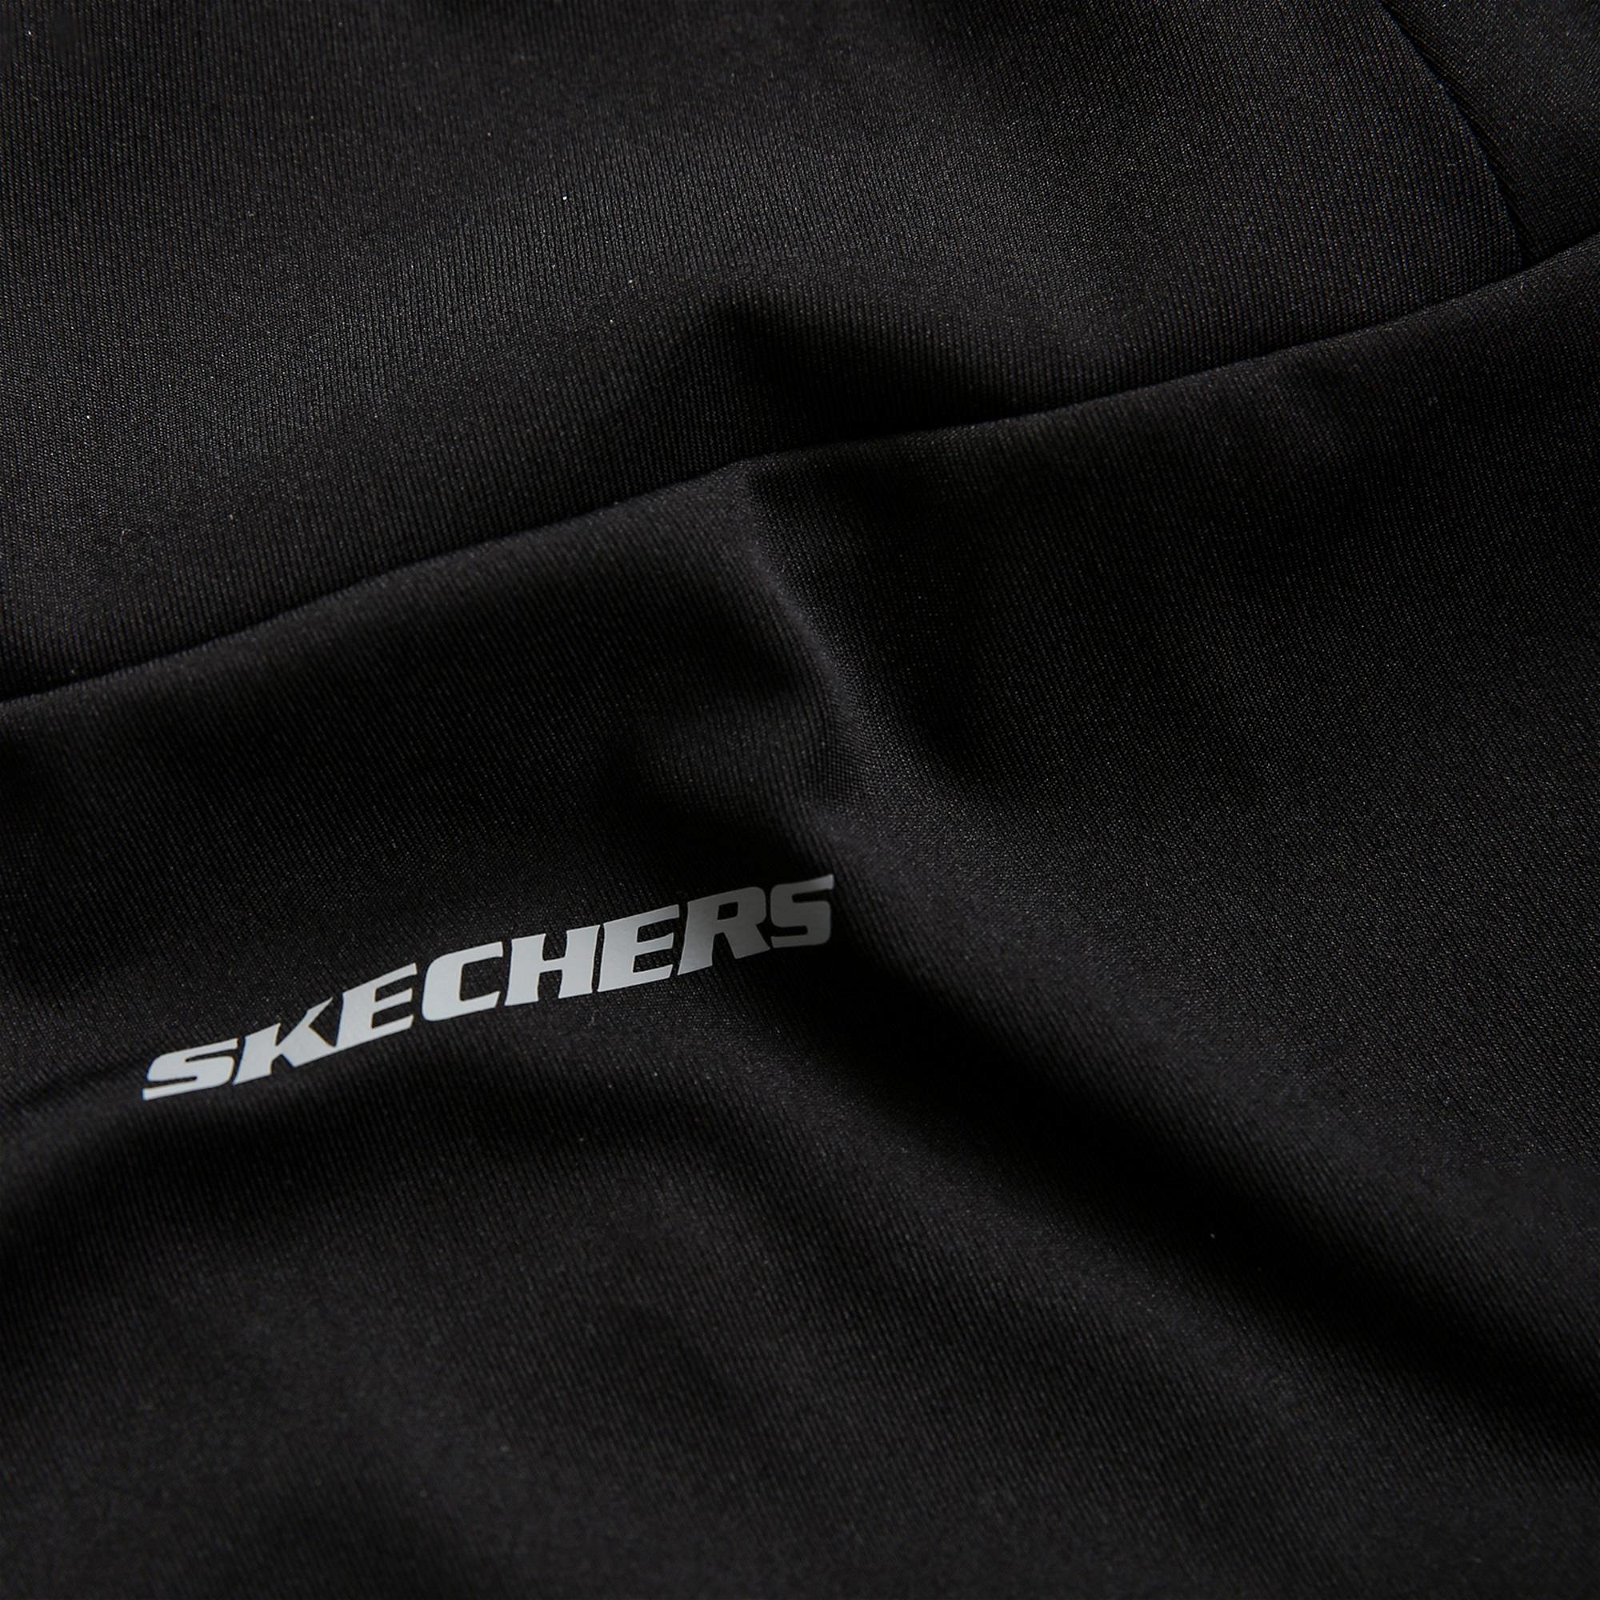 Skechers Table Project Biker Kadın Siyah Tayt